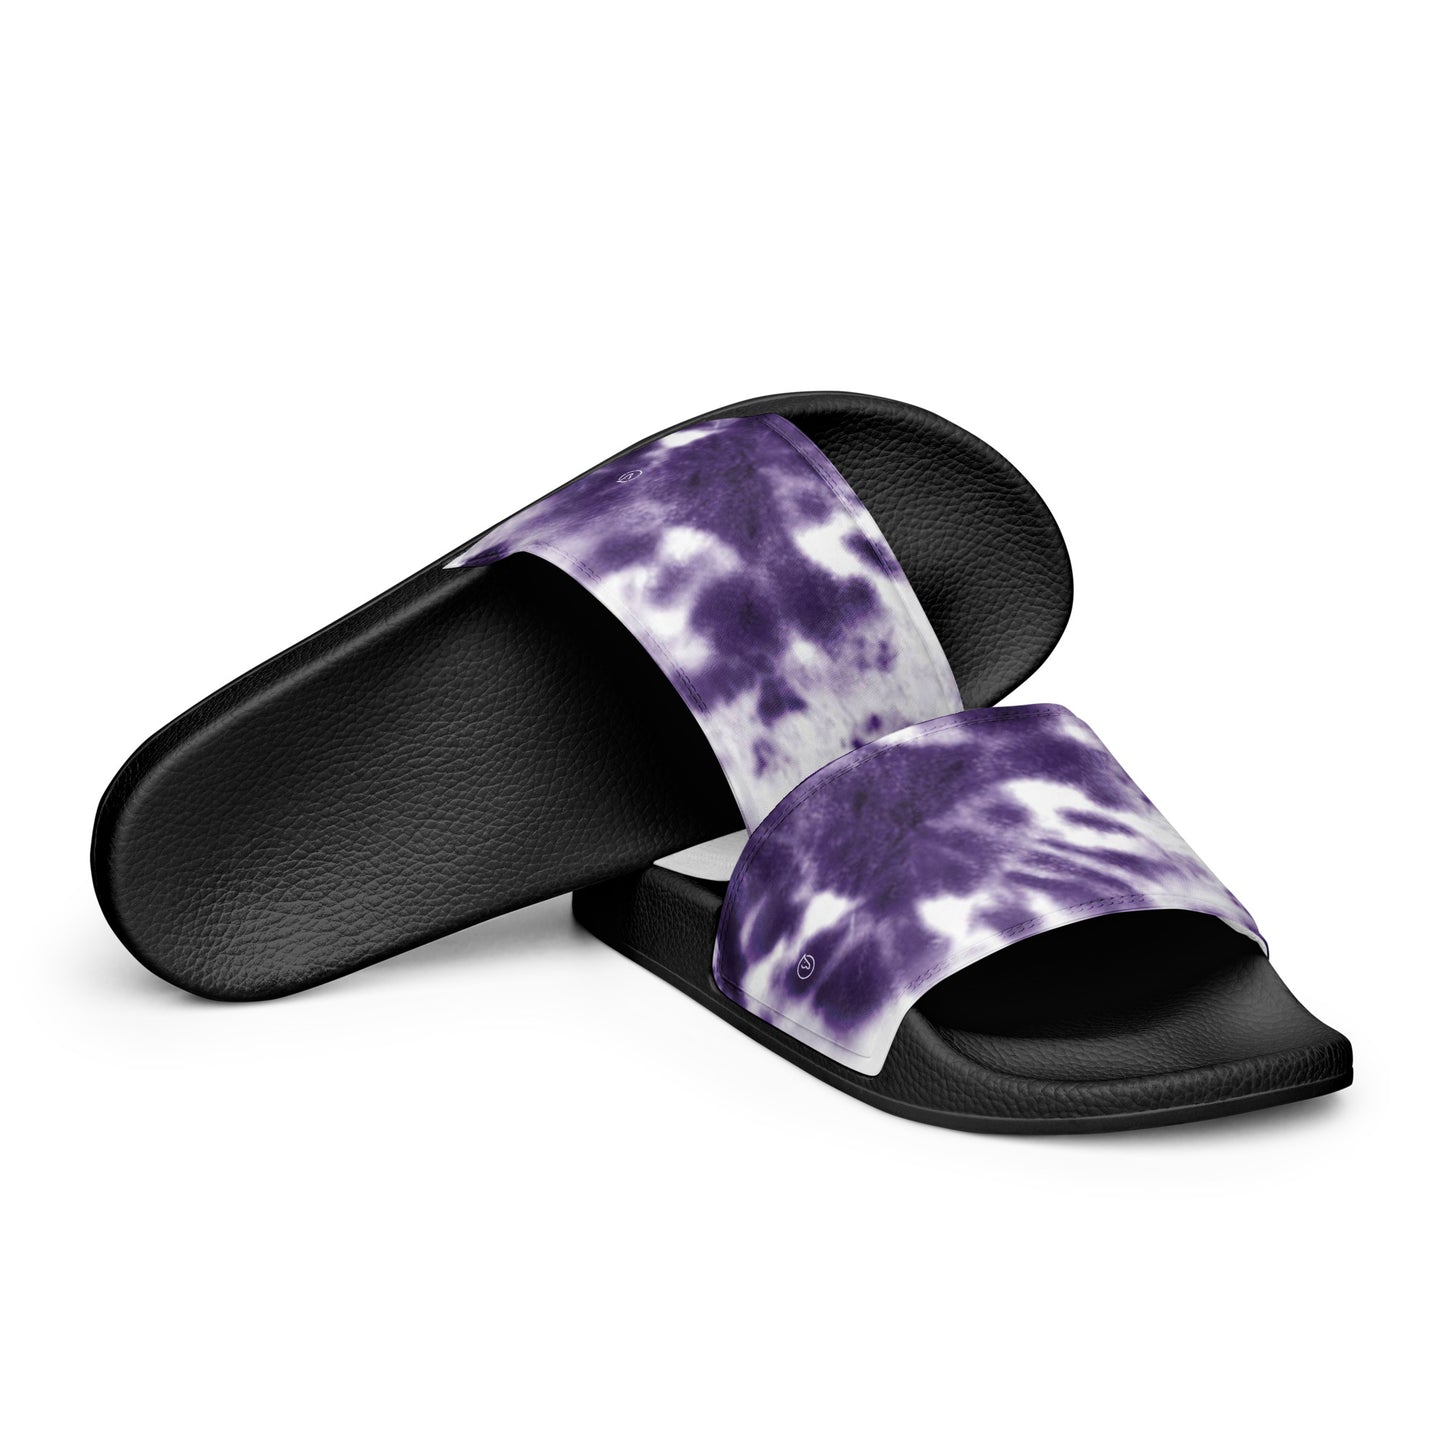 Humble Sportswear™ Women's Purple Dyed Slides Sandals